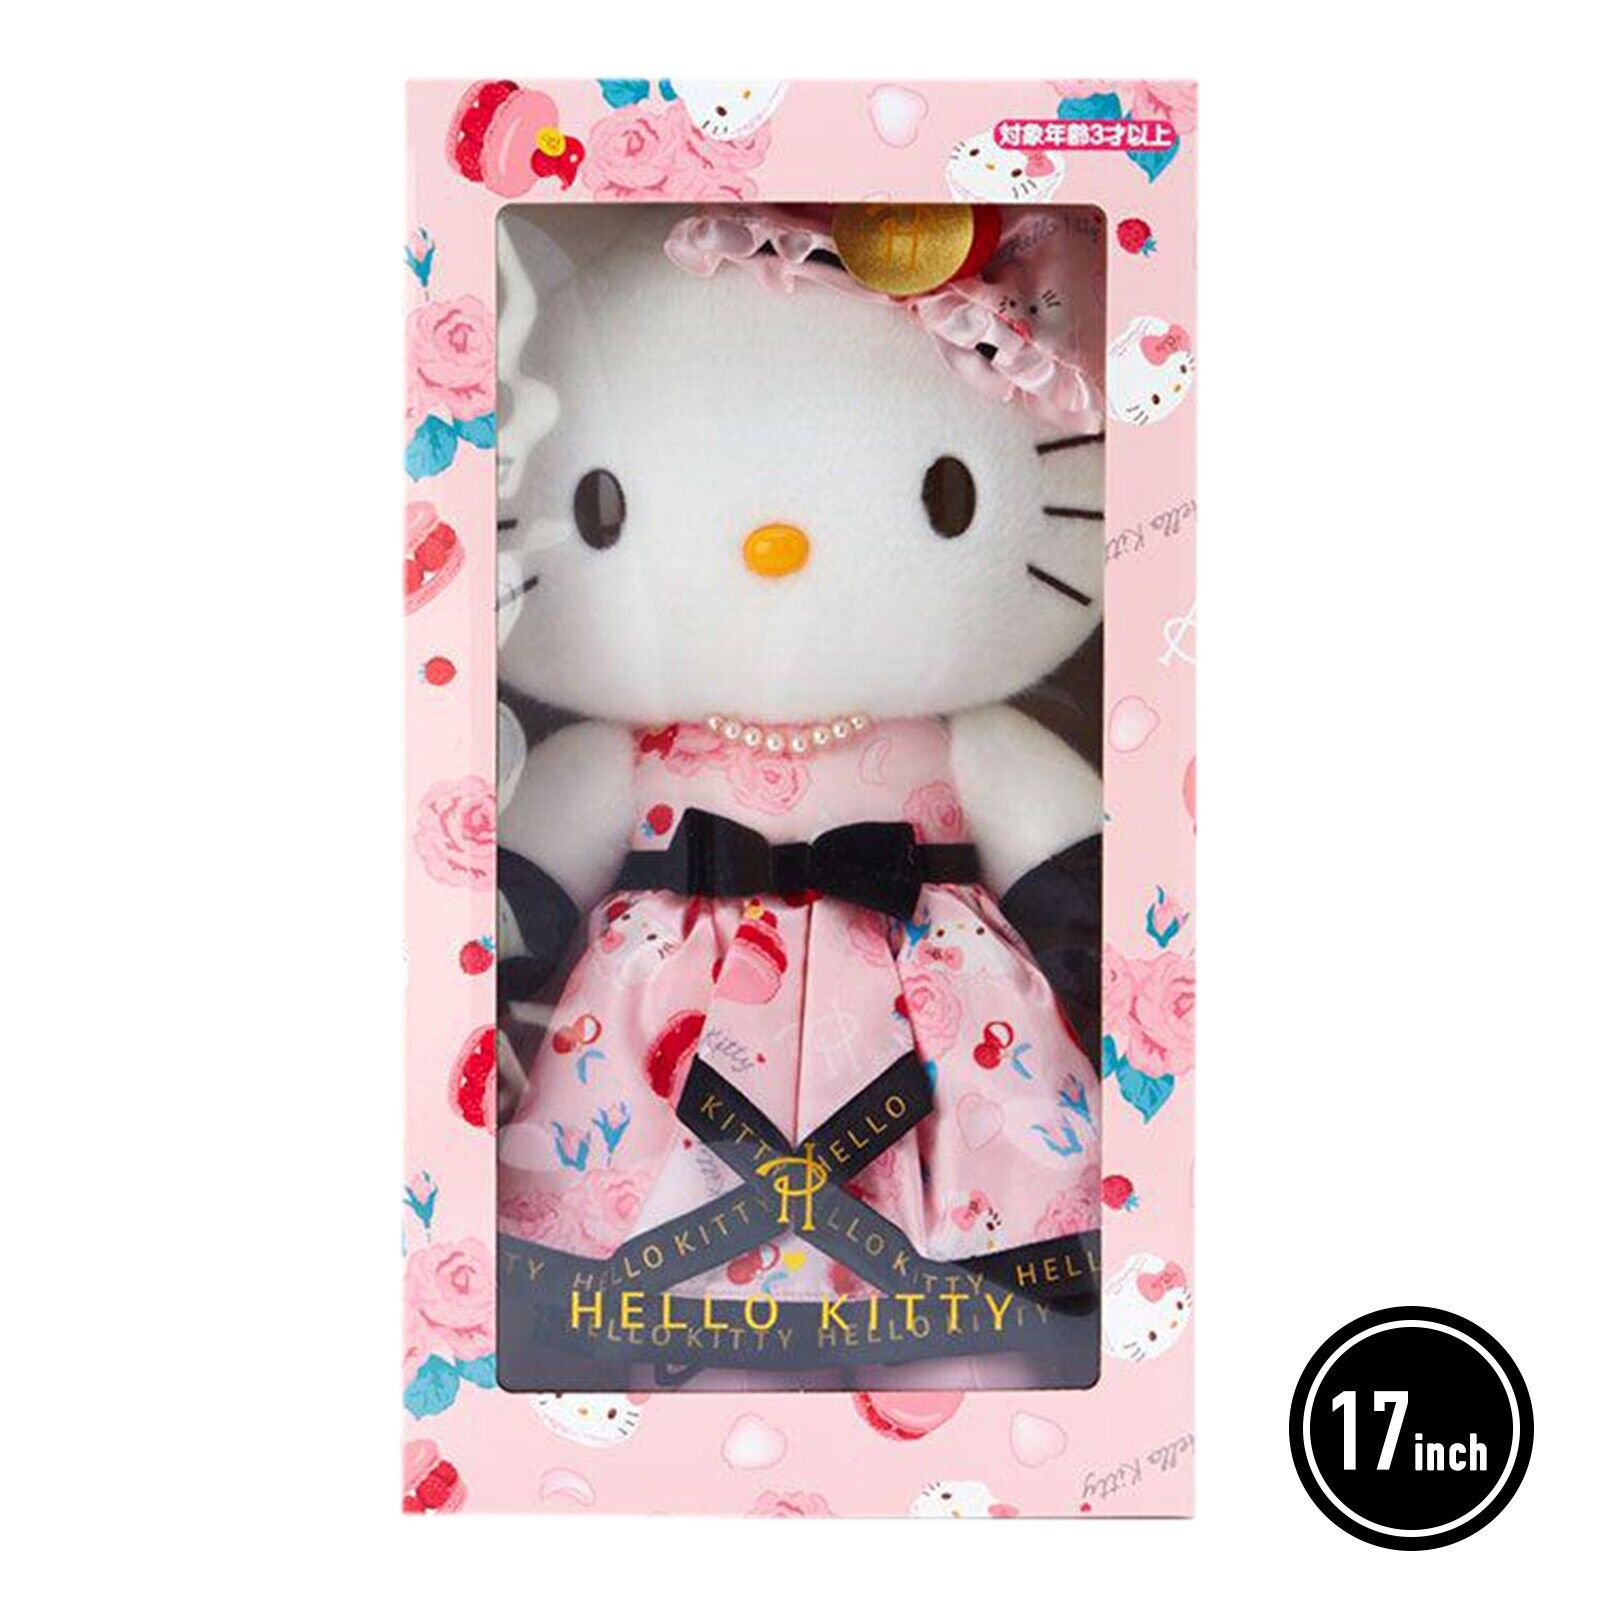 Sanrio Hello Kitty PIERRE HERMÉ Birthday Plush Doll Stuffed Toy 2021 Japan New